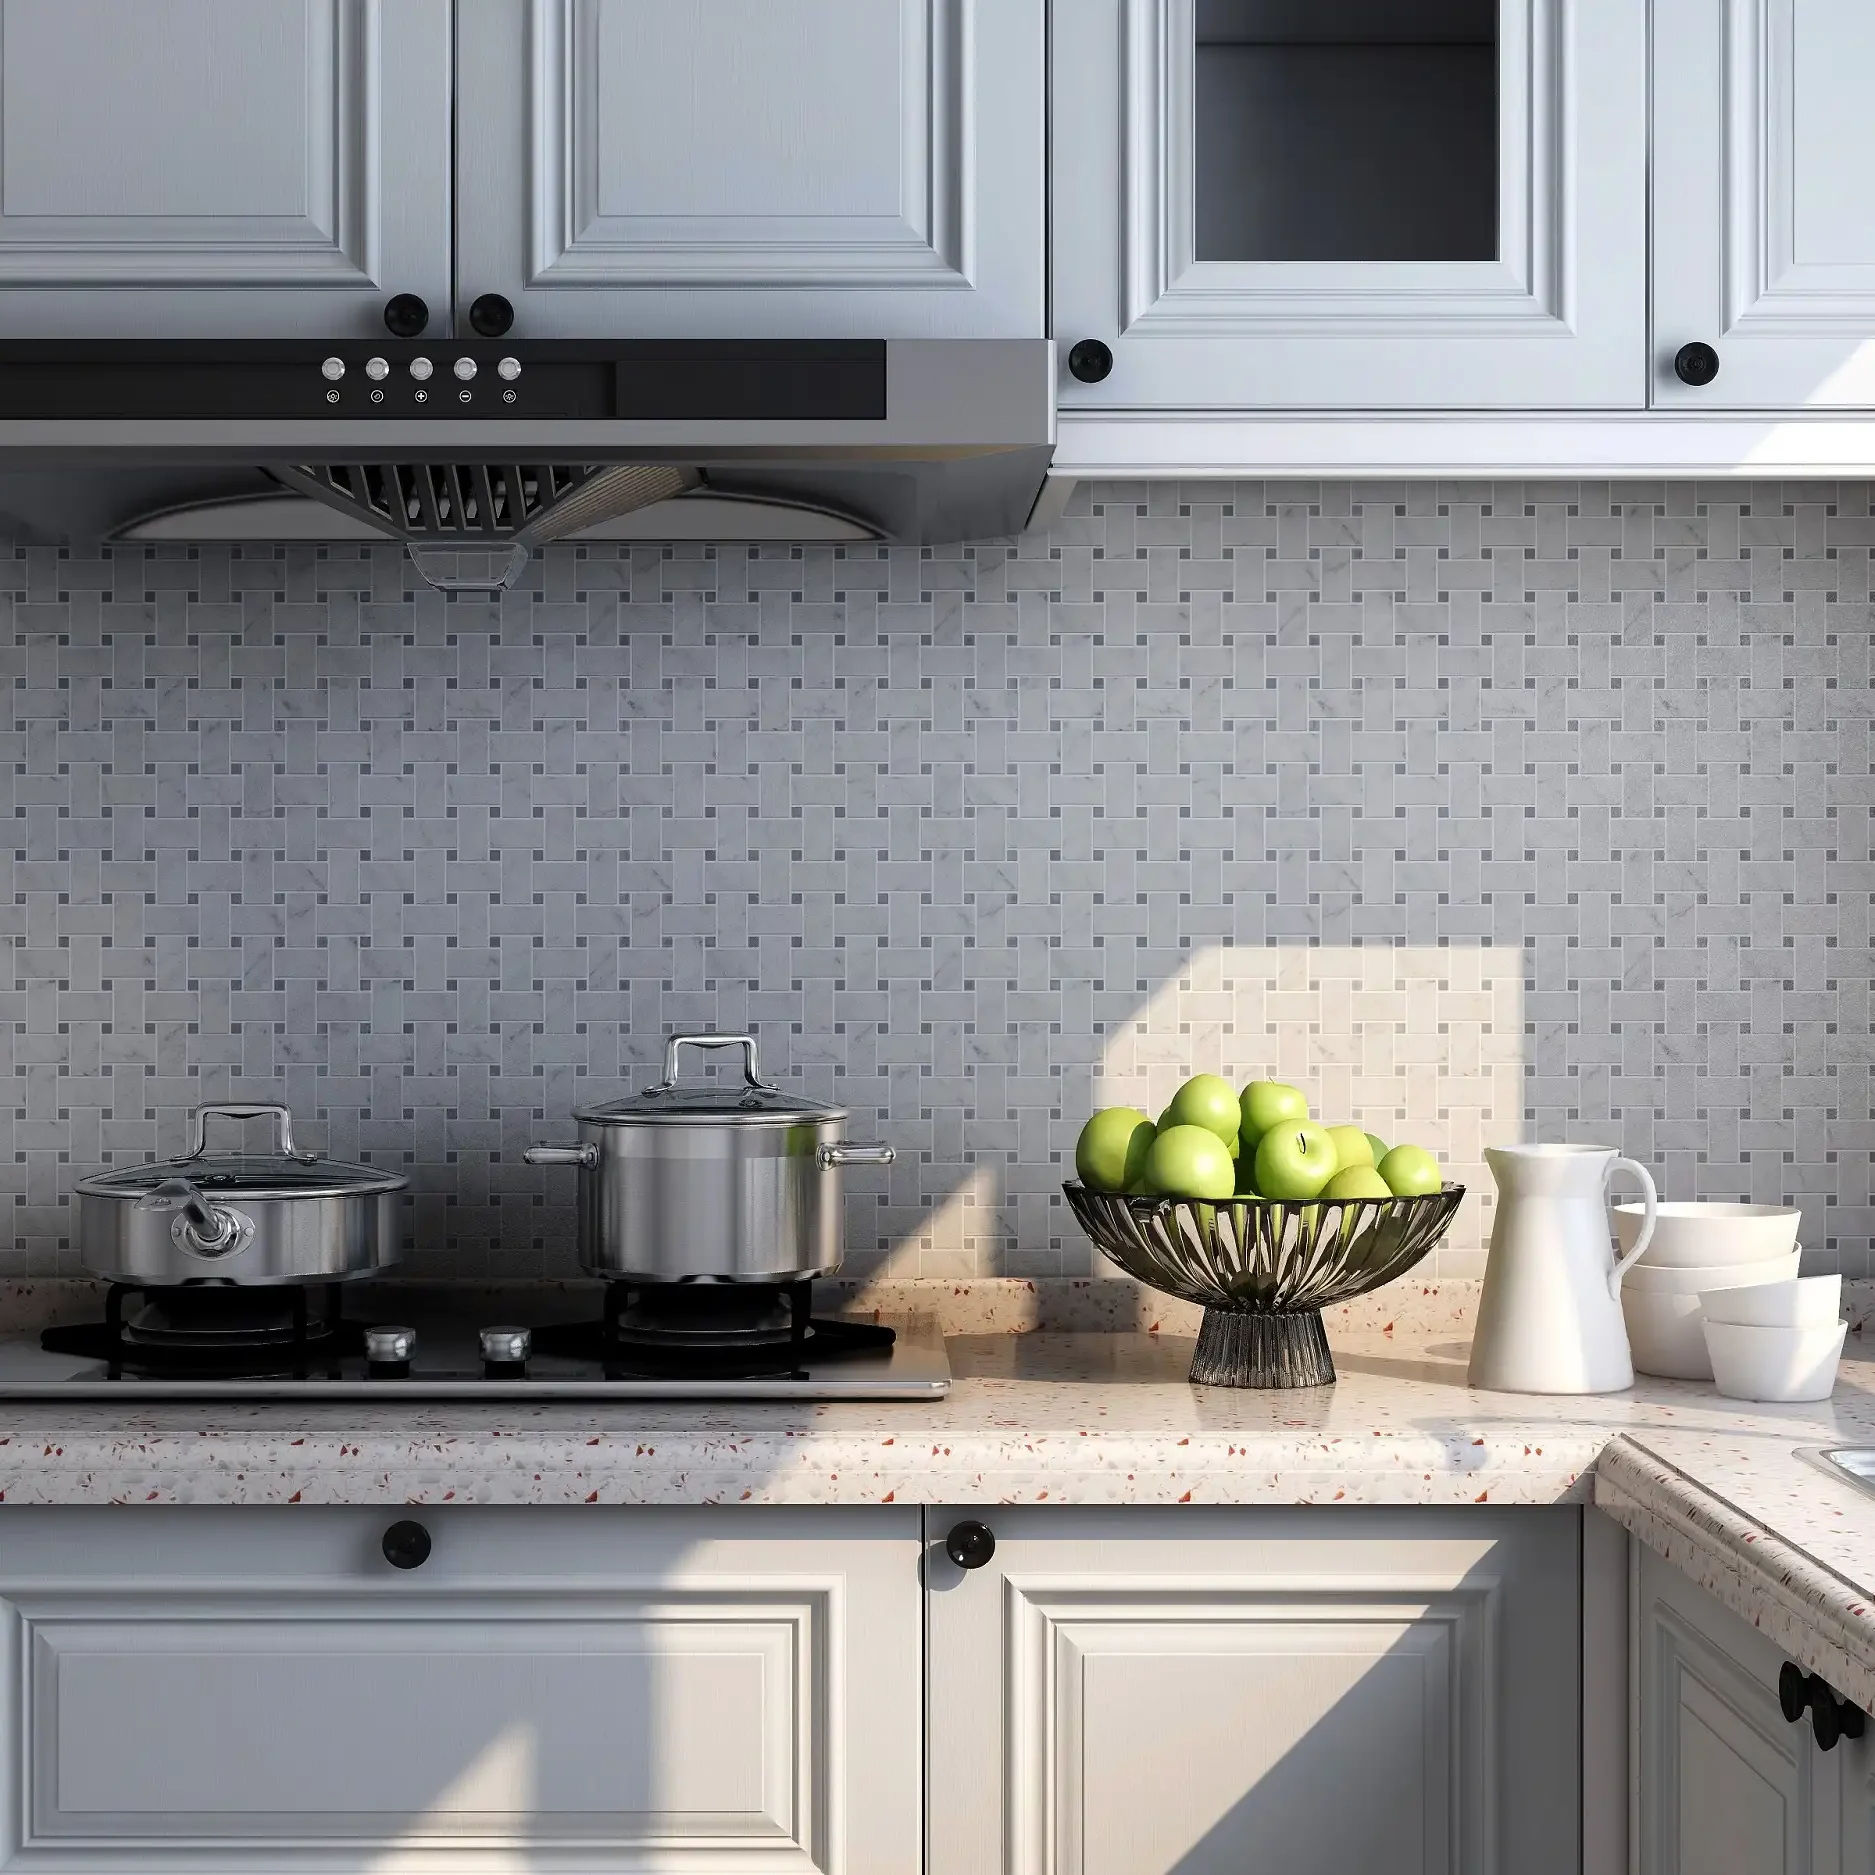 Image of kitchen with backsplash featuring basketweave mosaic tile with bardiglio grey dots